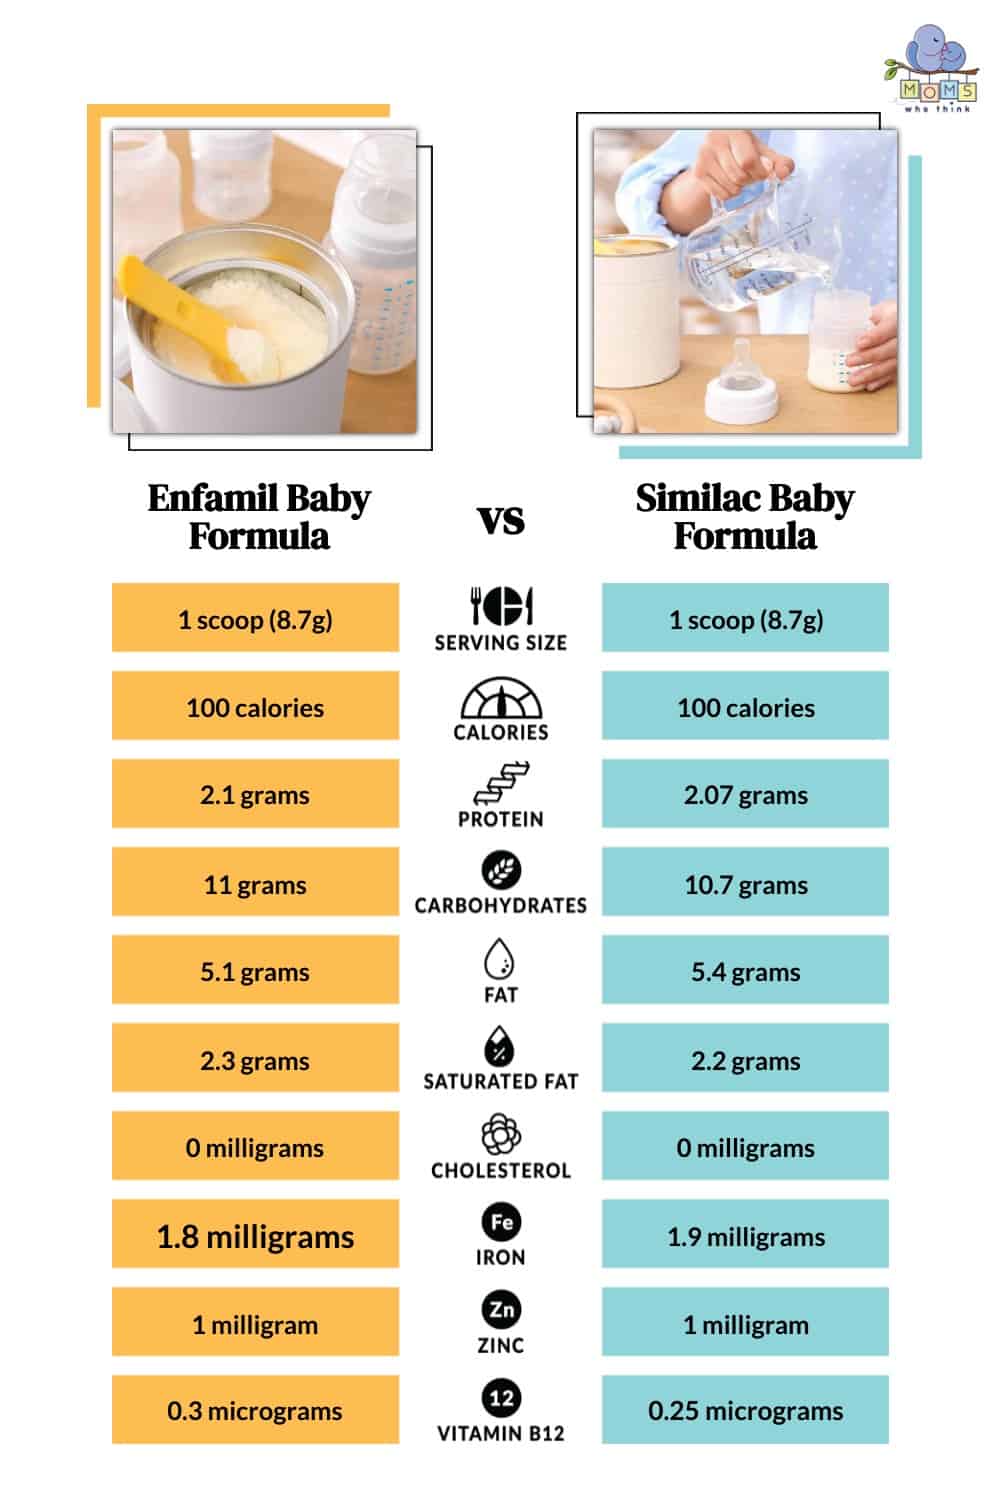 Enfamil Baby Formula vs Similac Baby Formula Nutritional Facts